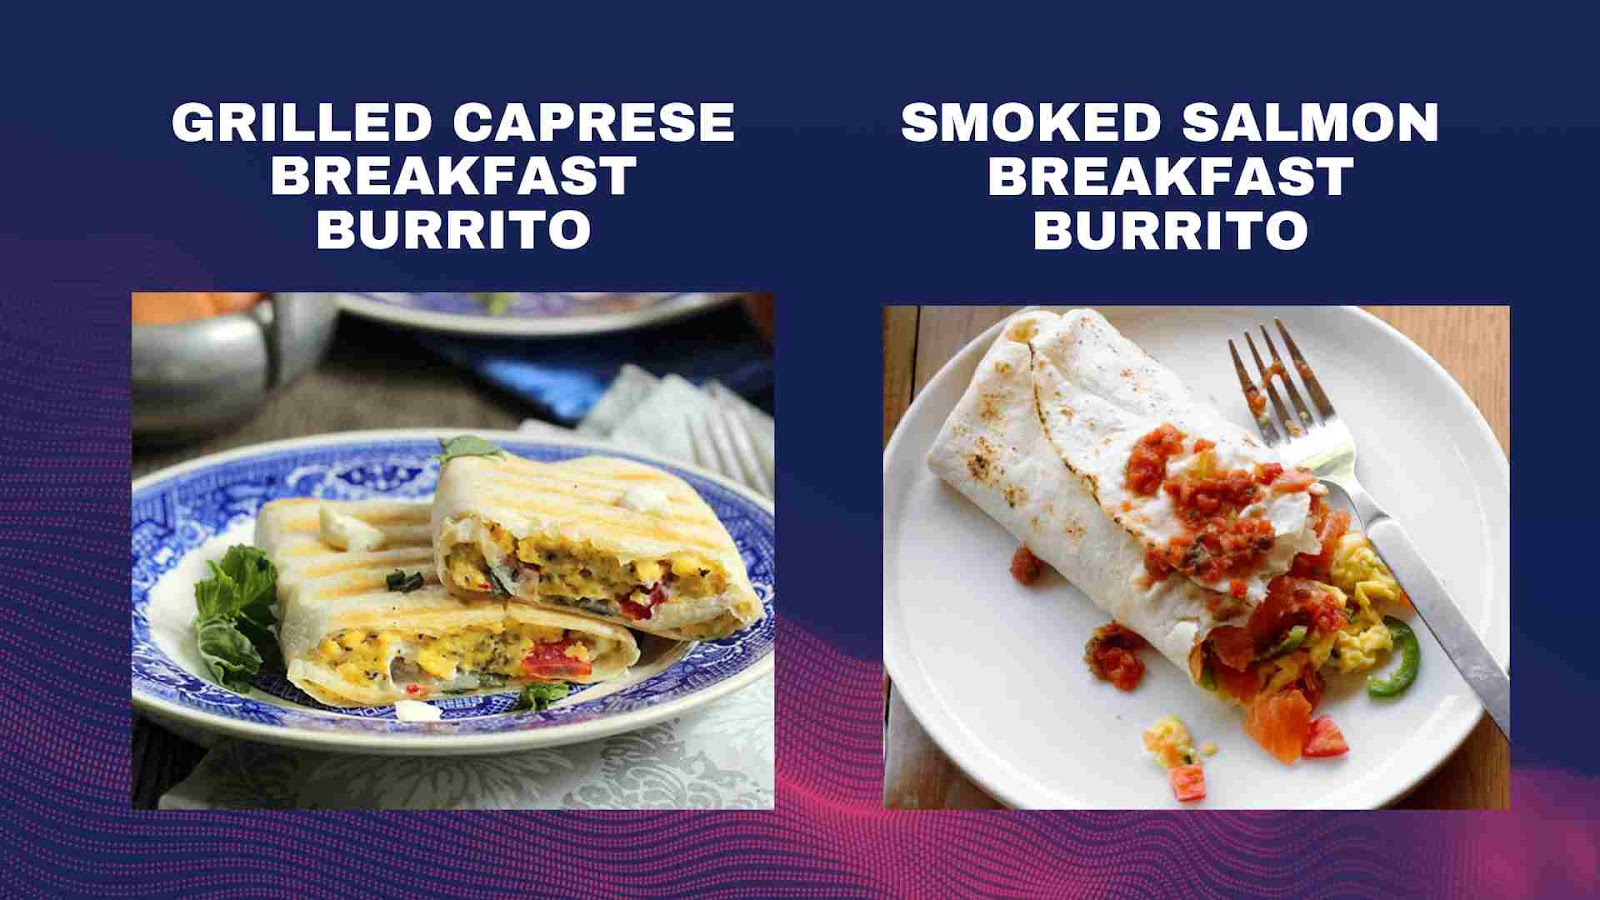 Smoked Salmon Breakfast Burrito and Grilled Caprese Breakfast Burrito